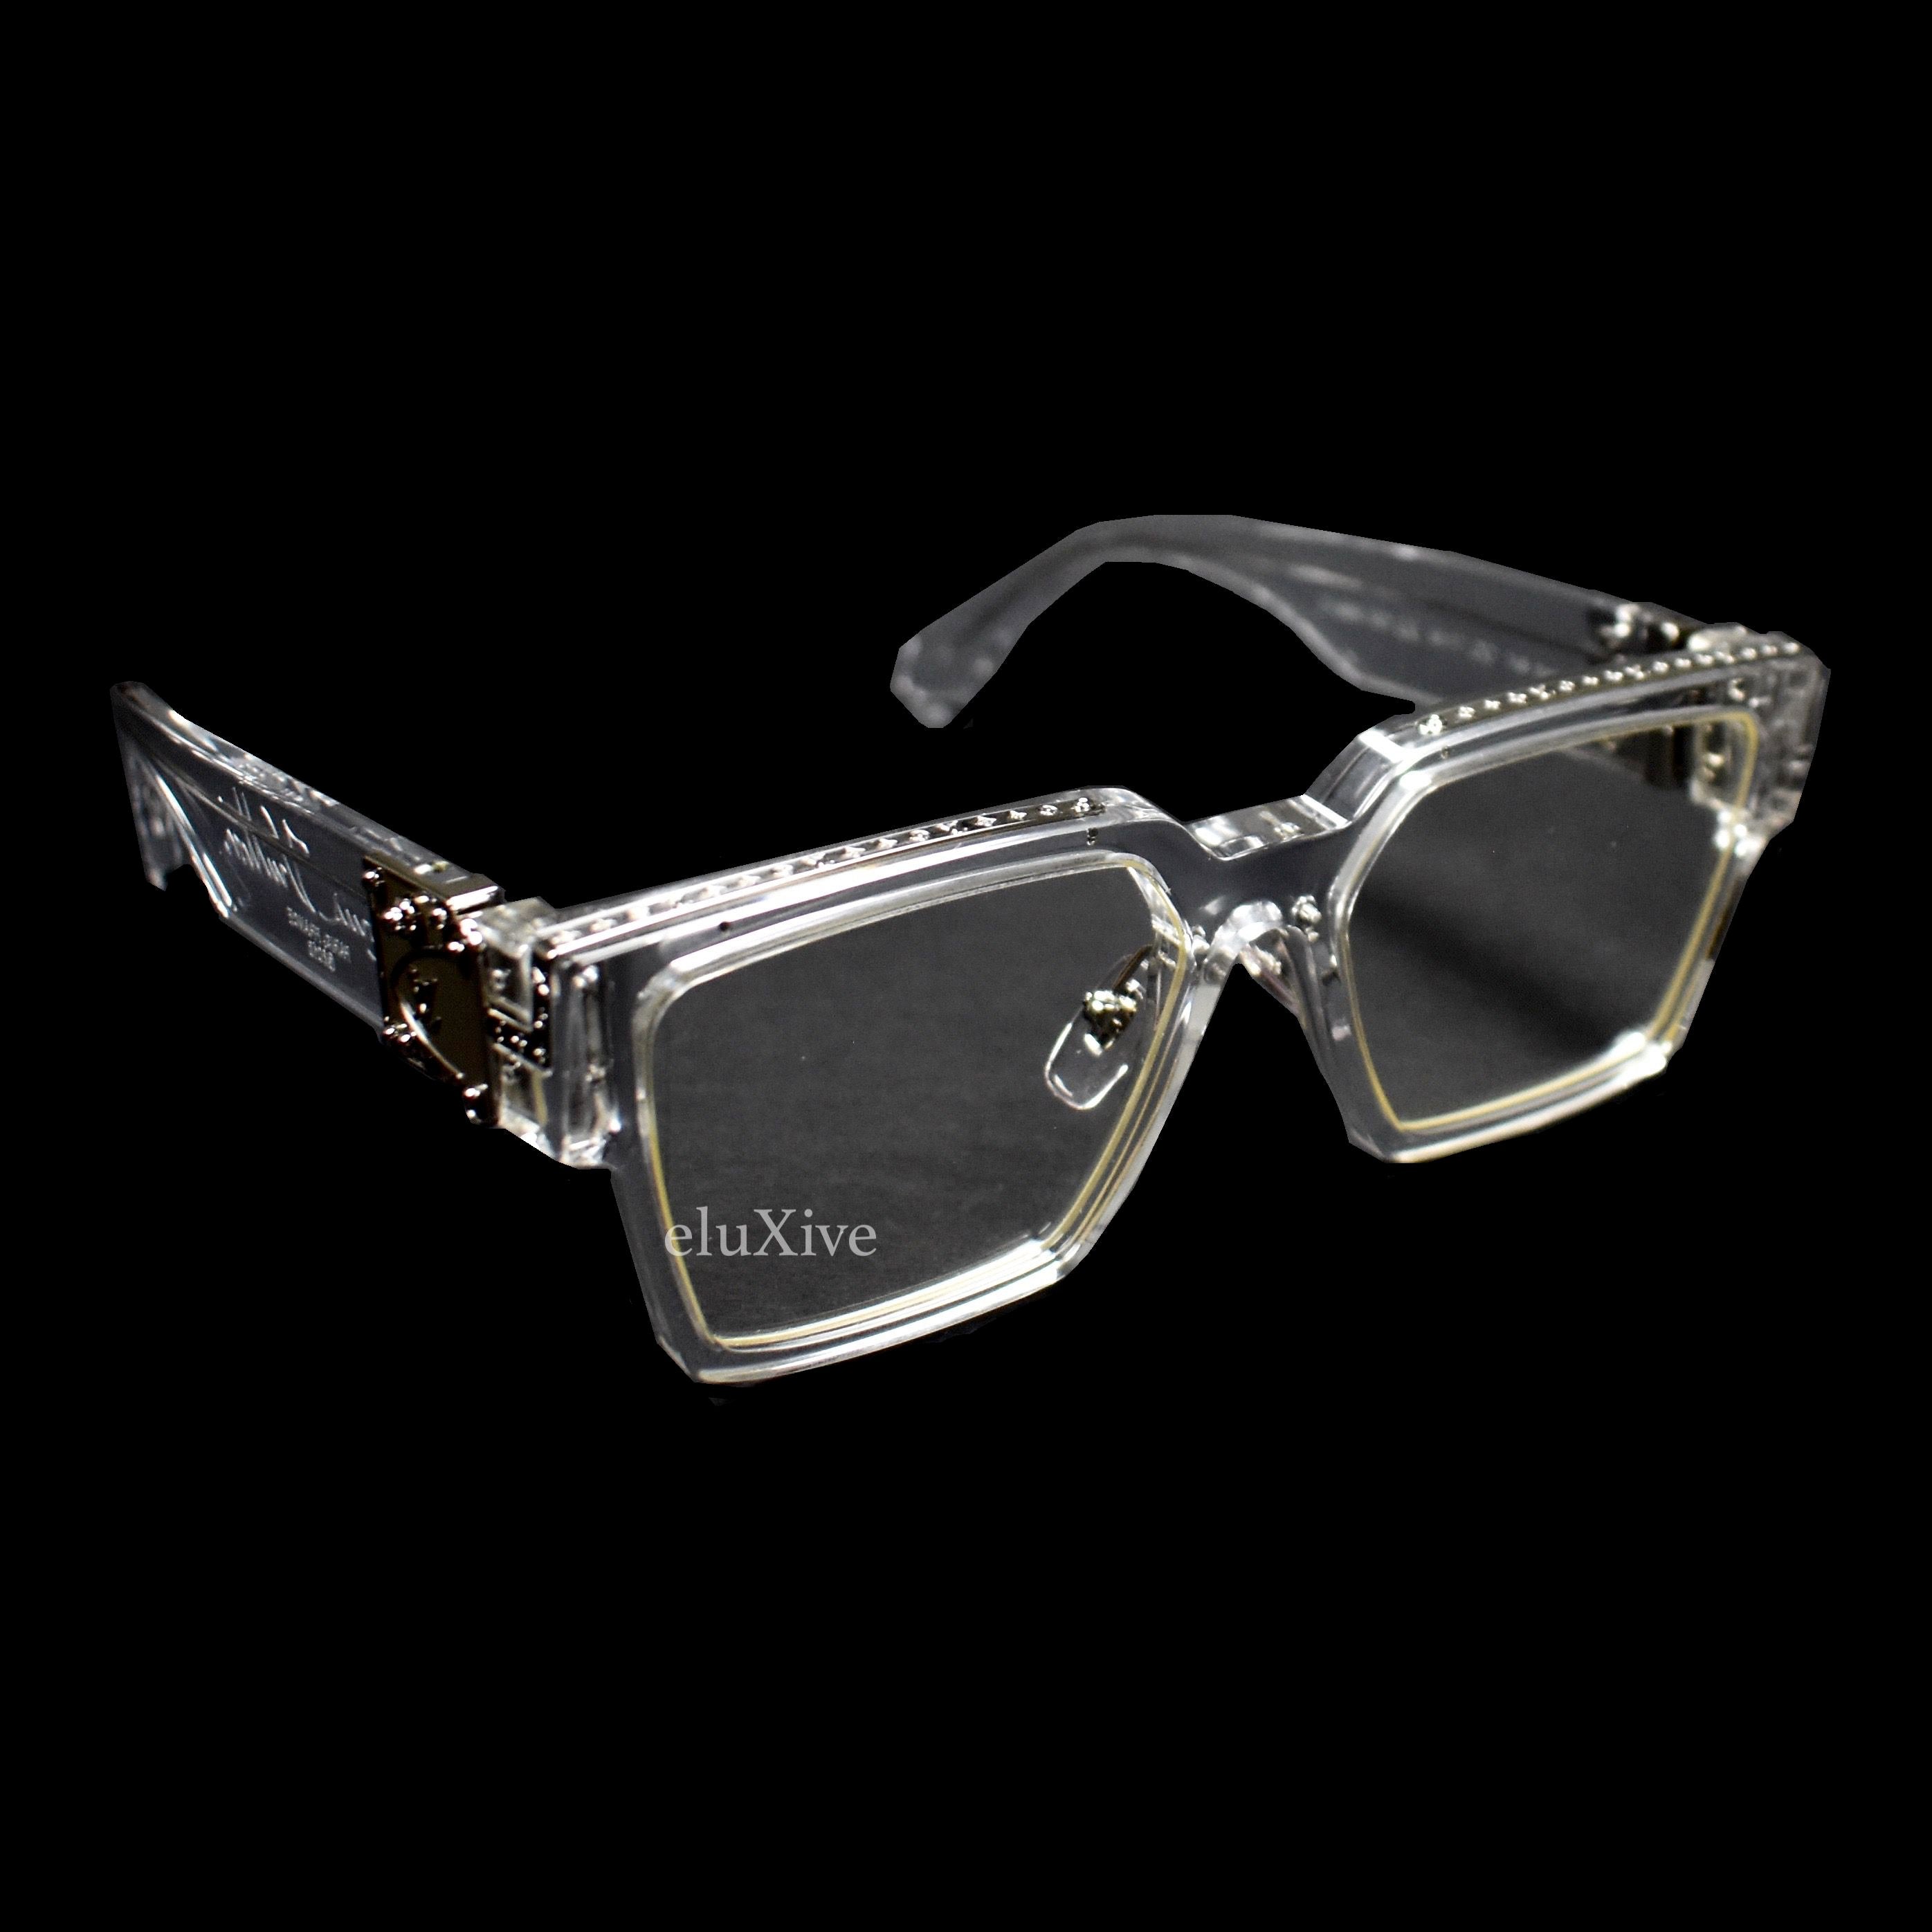 LV Millionairs 1.01 sunglasses missing box glasses only fully authentic   Sunglasses women aviators, Sunglasses, Louis vuitton millionaire sunglasses